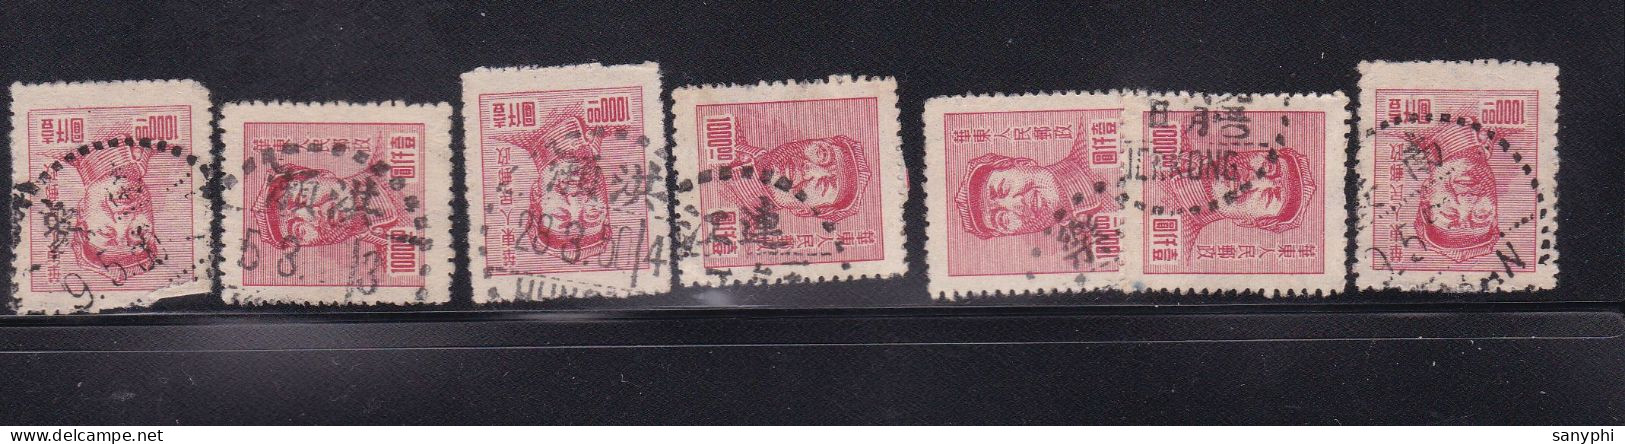 East China 1949 Mao 1000Yuan,7 Used Stamps - Ongebruikt